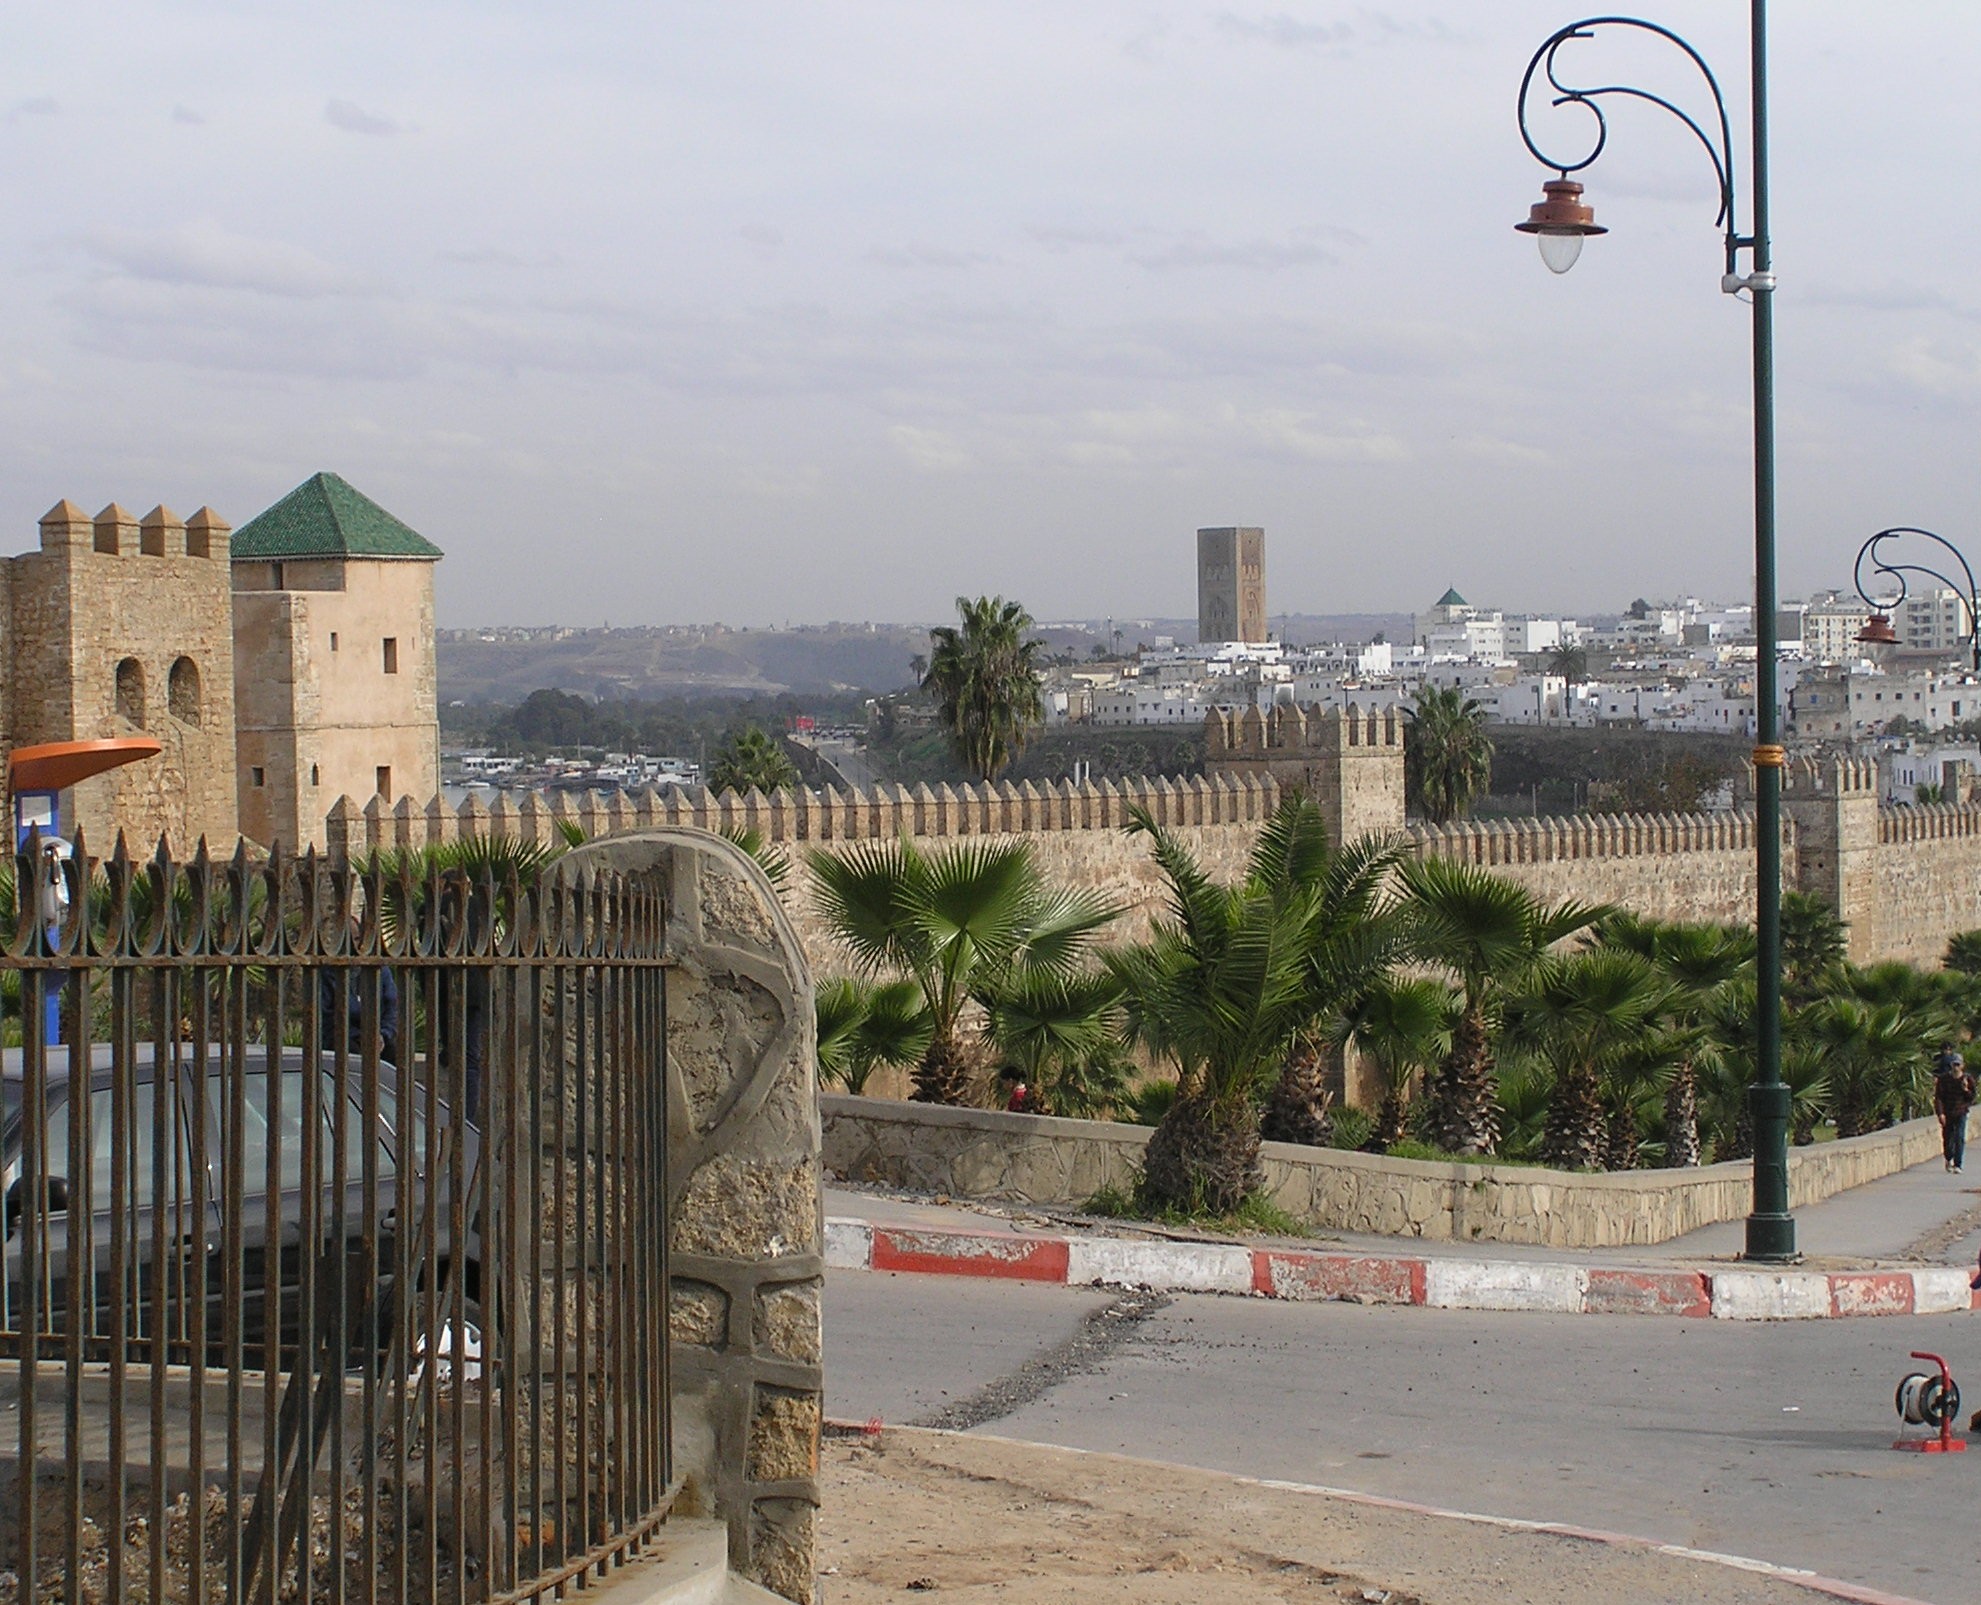 Impression of the capital Rabat